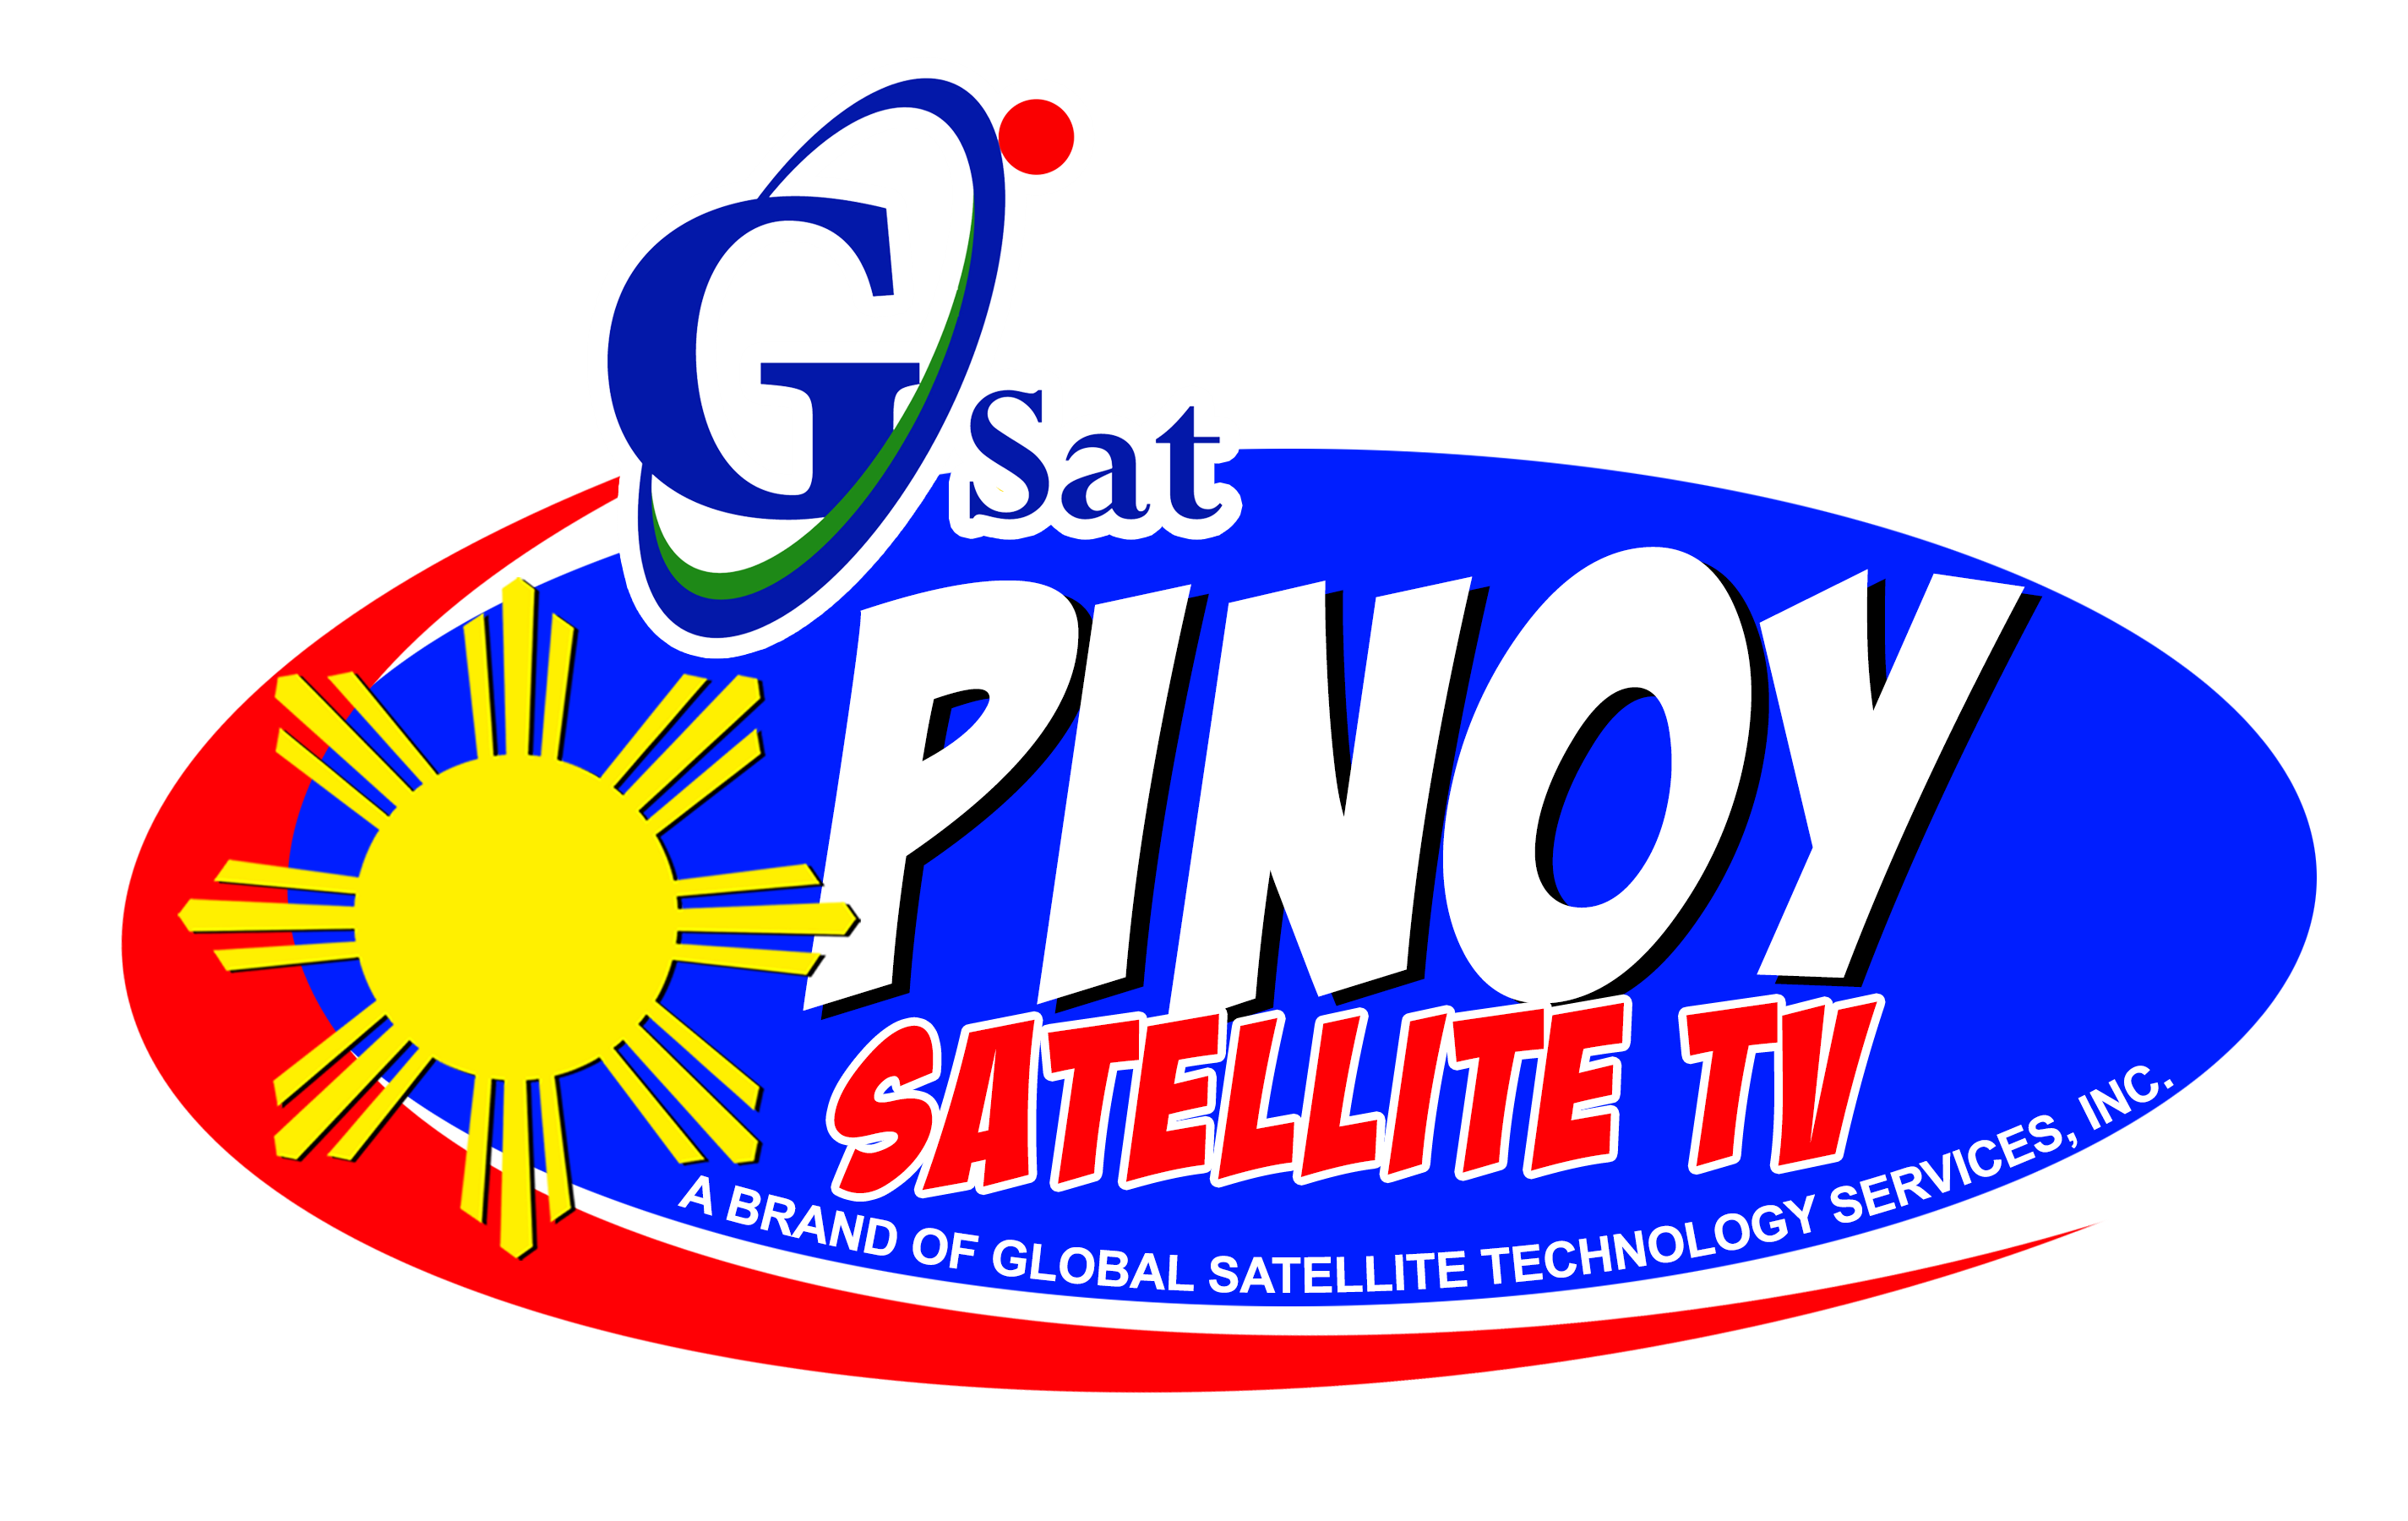 GsatPinoy Satellite TV